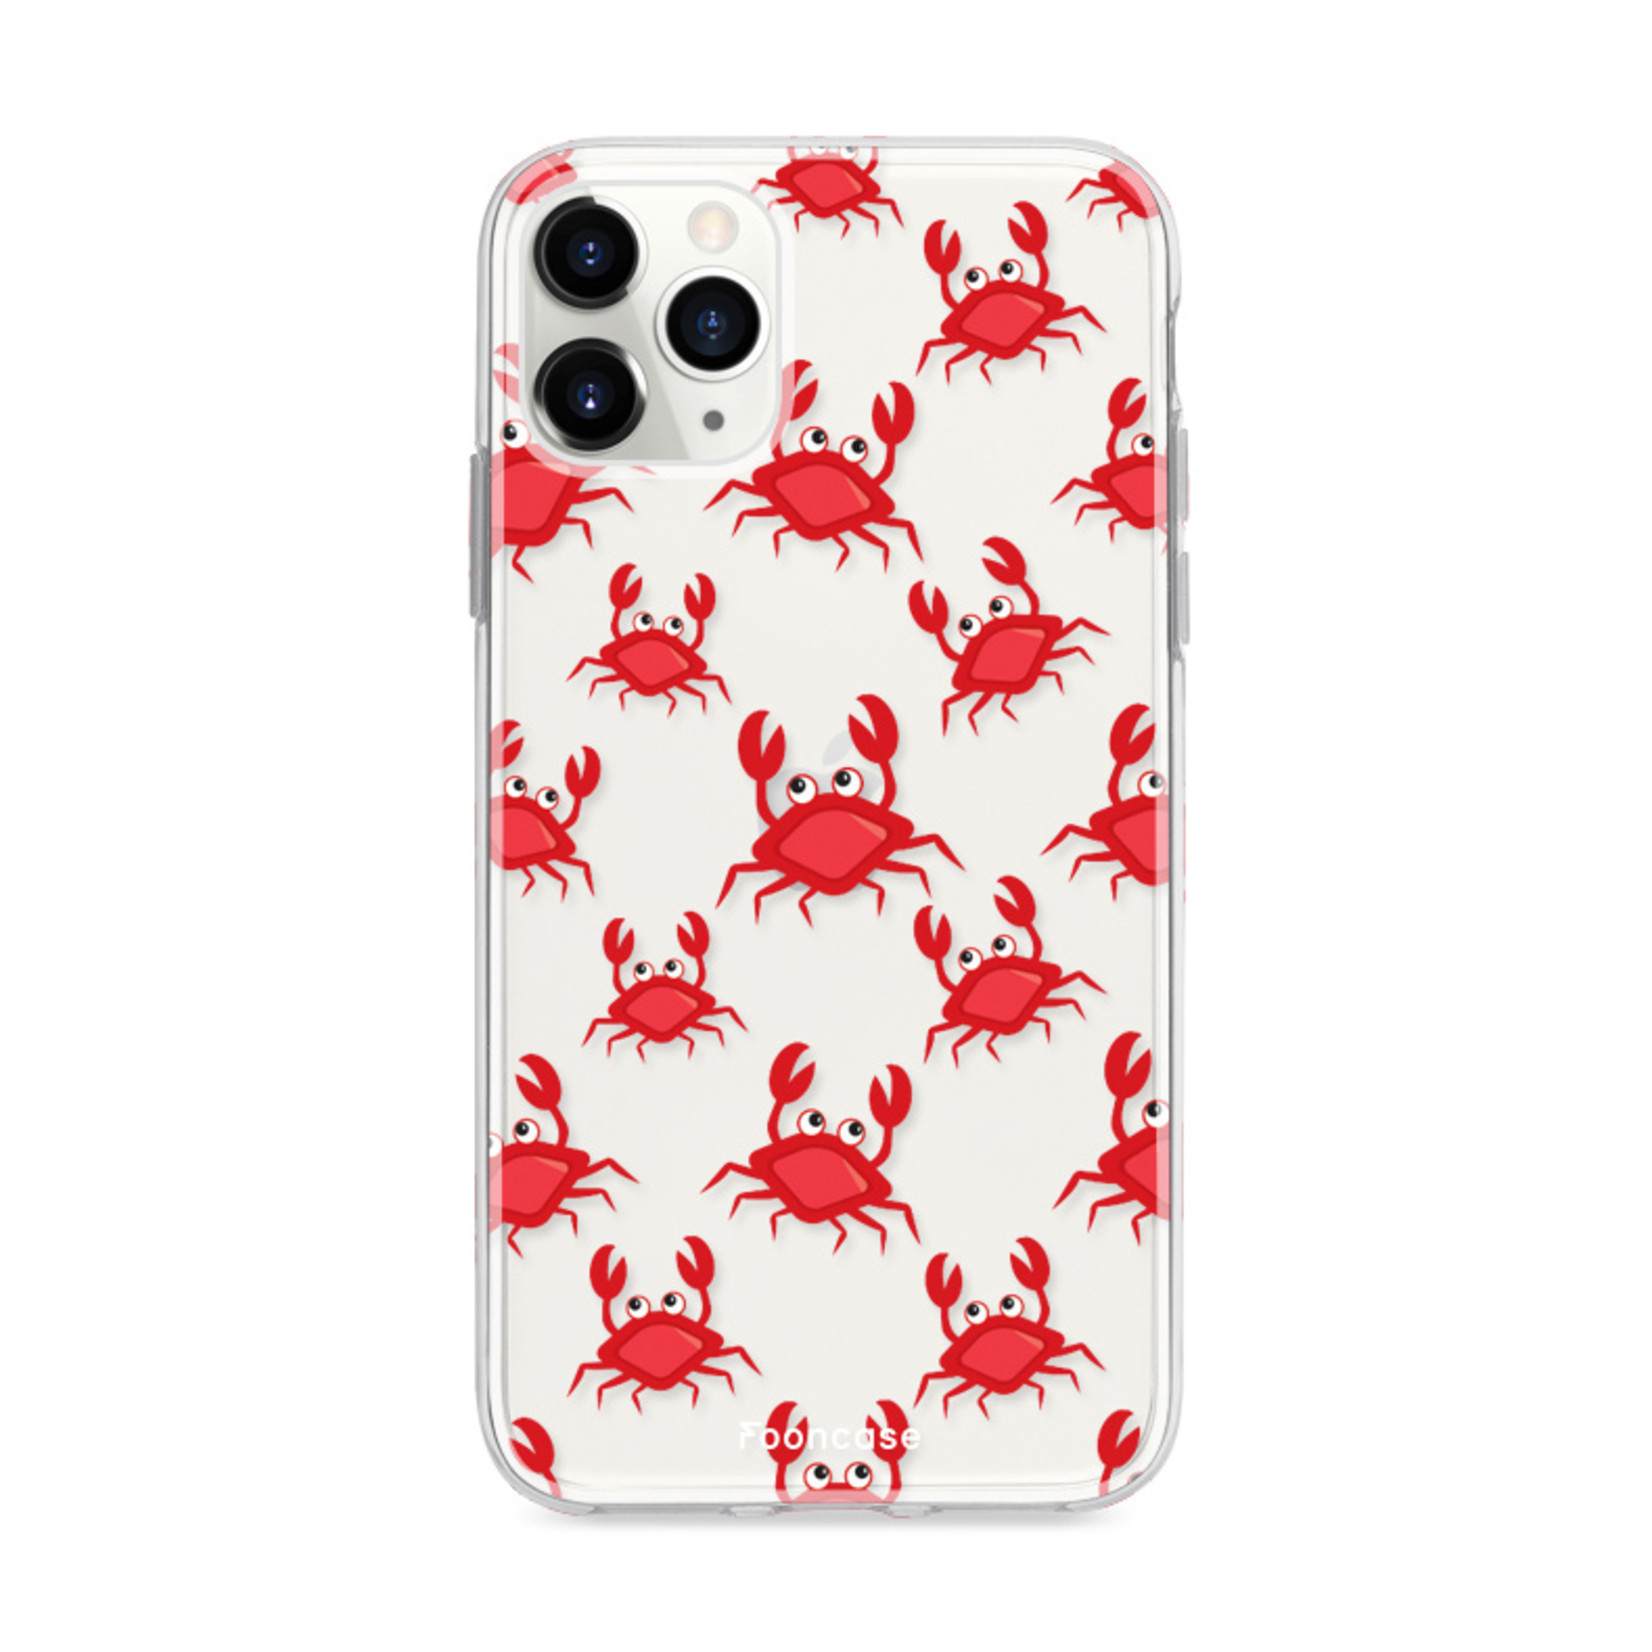 FOONCASE iPhone 11 Pro hoesje TPU Soft Case - Back Cover - Crabs / Krabbetjes / Krabben